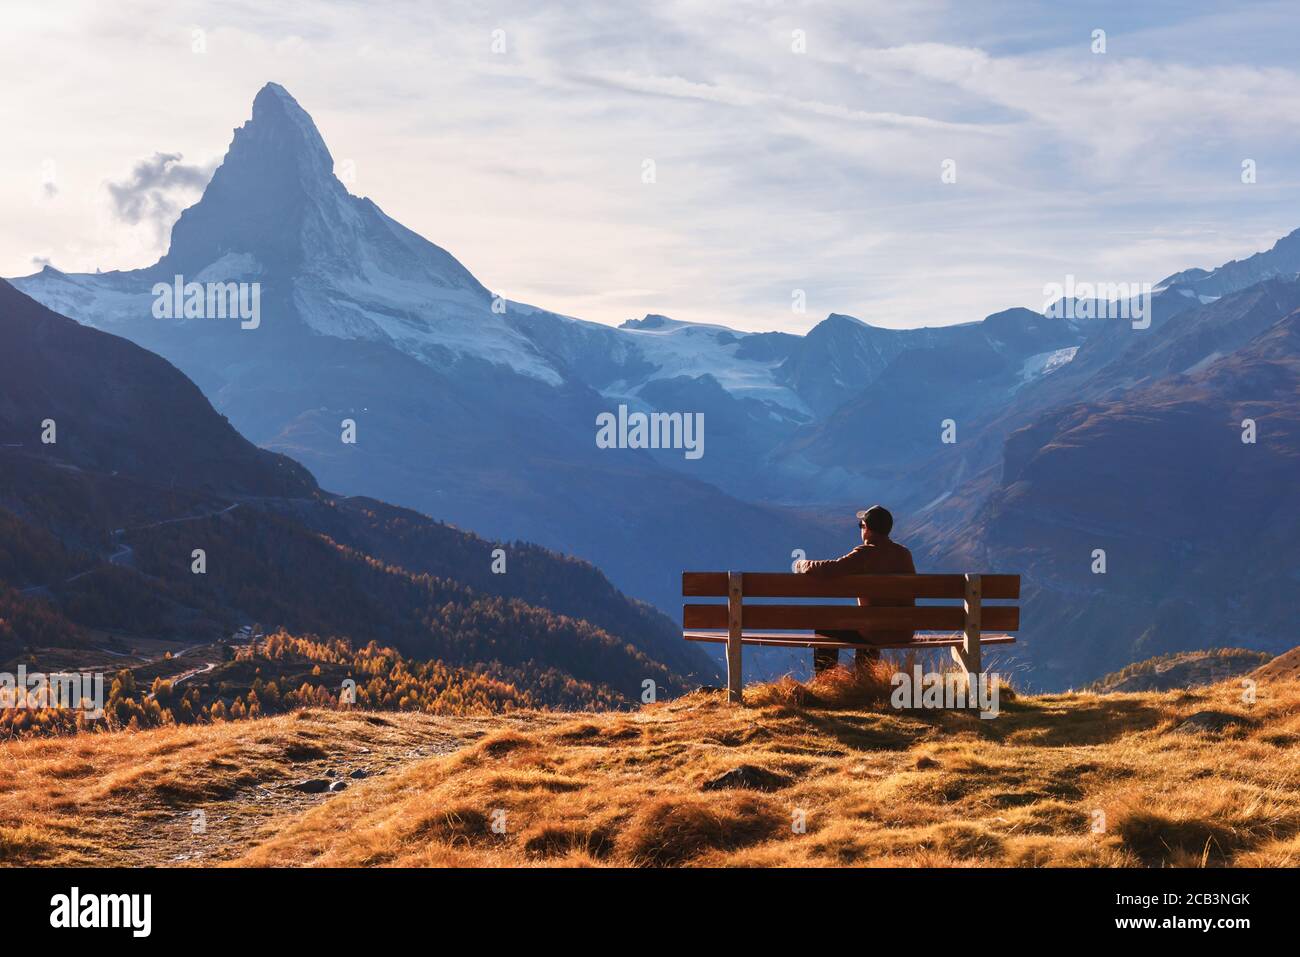 Picturesque view of Matterhorn peak and tourist sitting on wooden bench in Swiss Alps. Zermatt resort location, Switzerland. Landscape photography Stock Photo